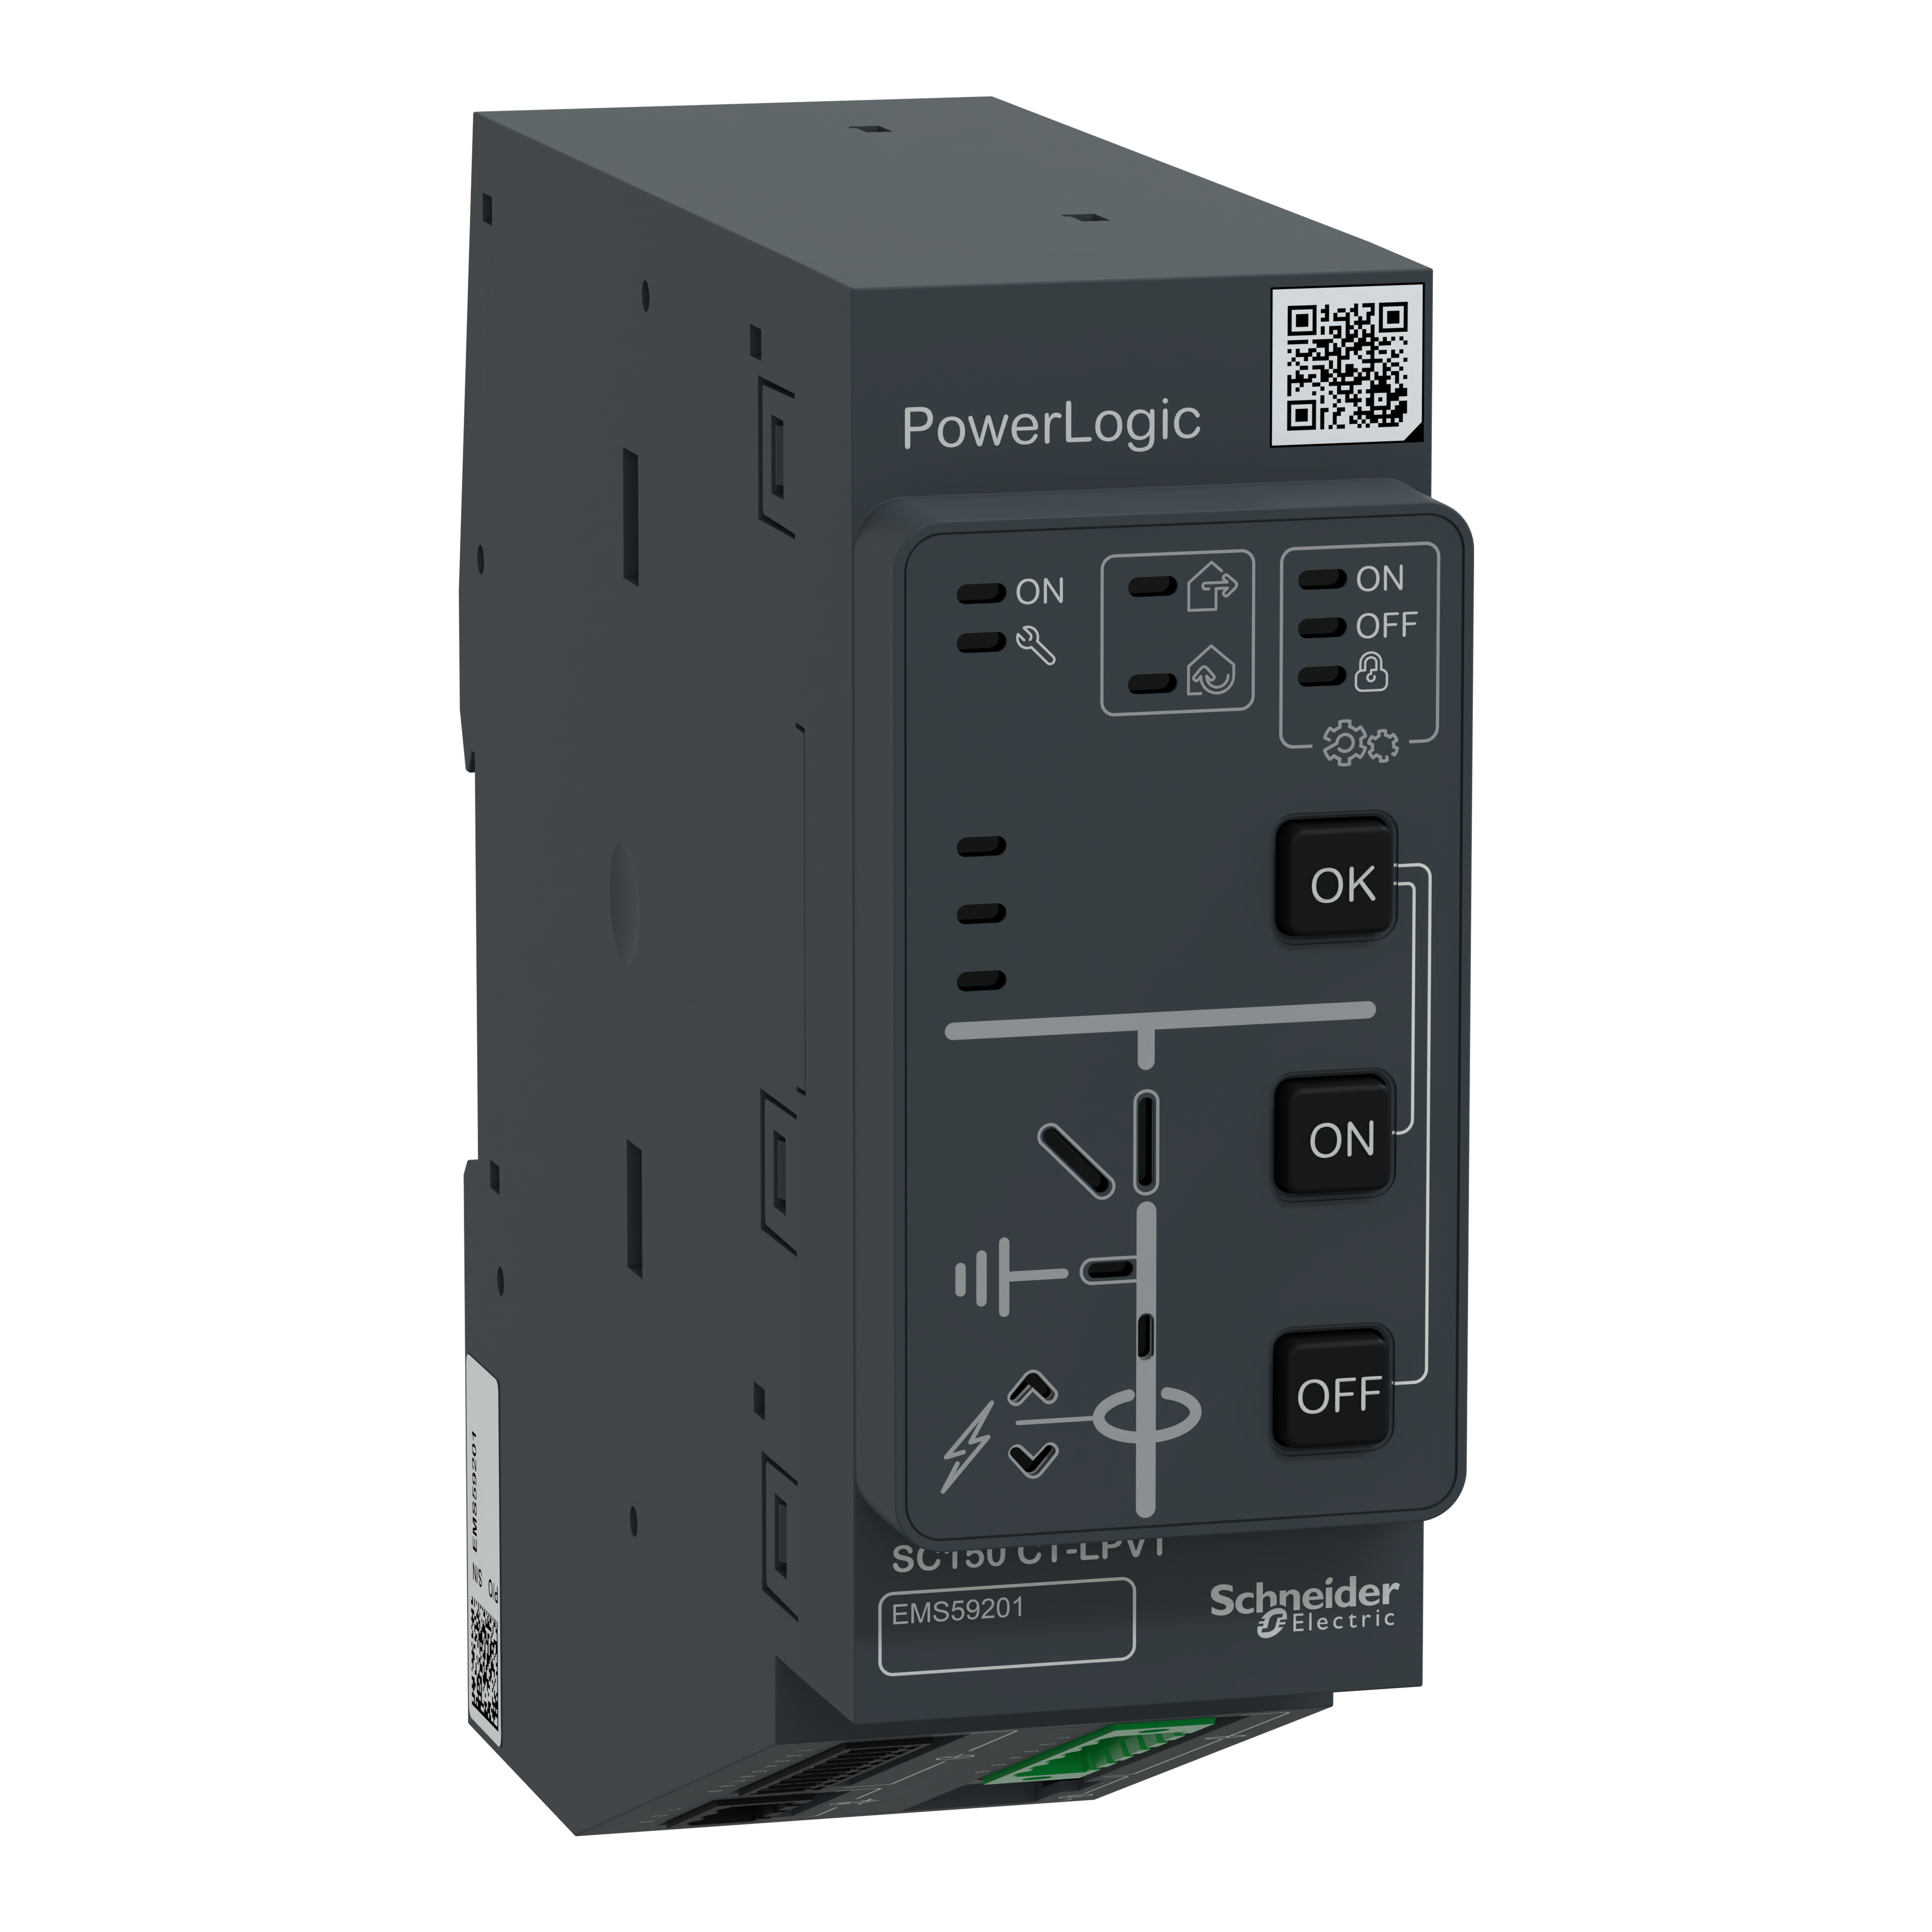 PowerLogic SC150 CT-LPVT/VT: Switch controller, 1/5 A, LPVT/VT sensors